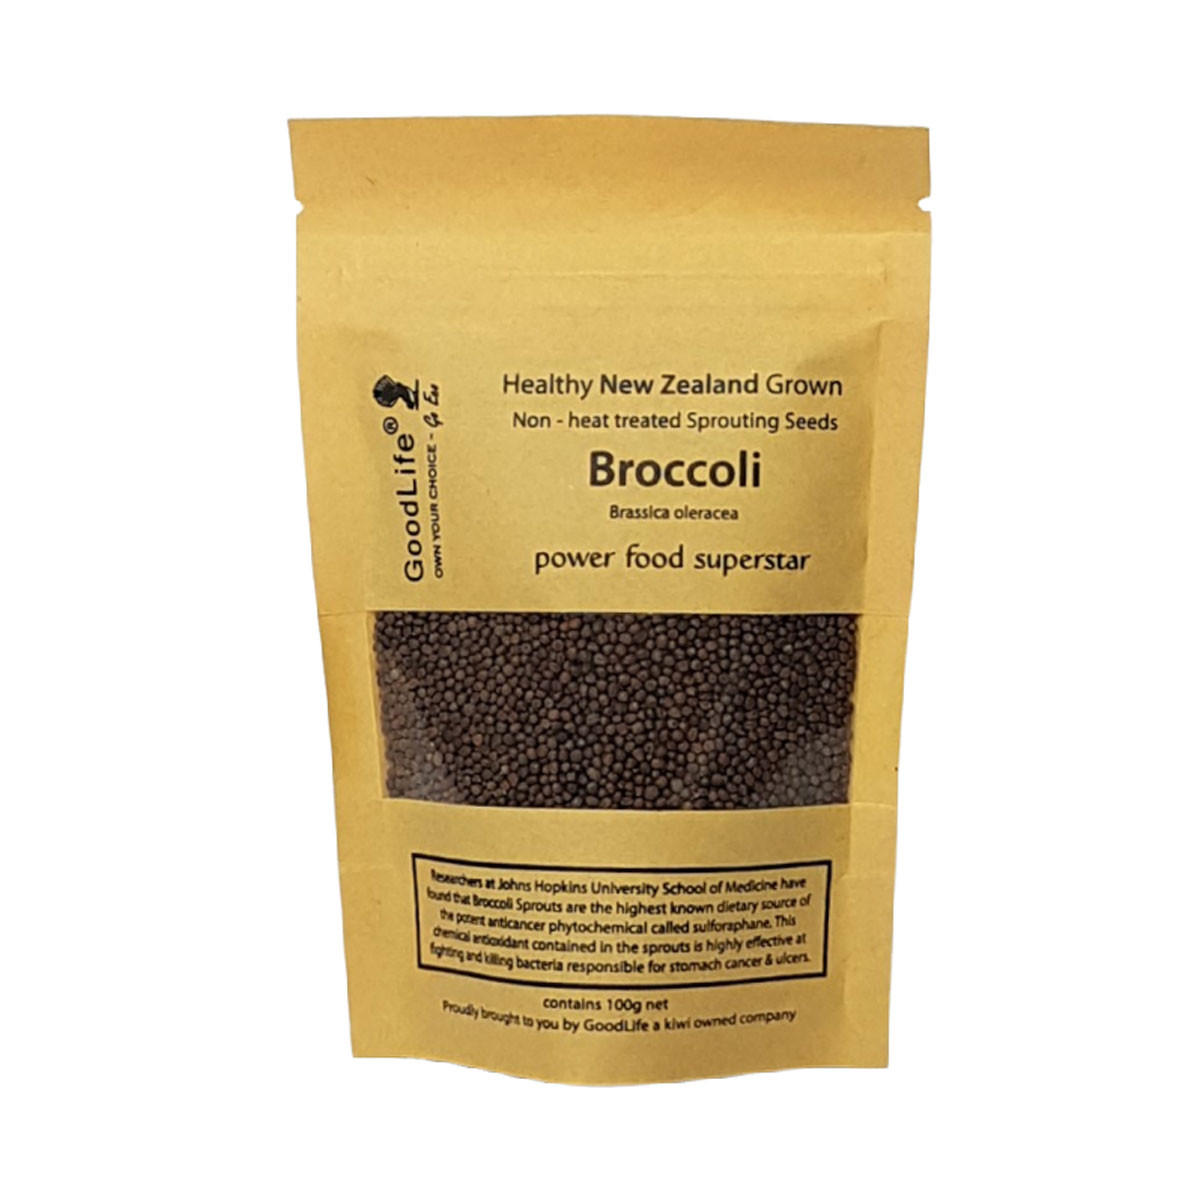 Goodlife - Broccoli Sprotuing seeds - [100g]